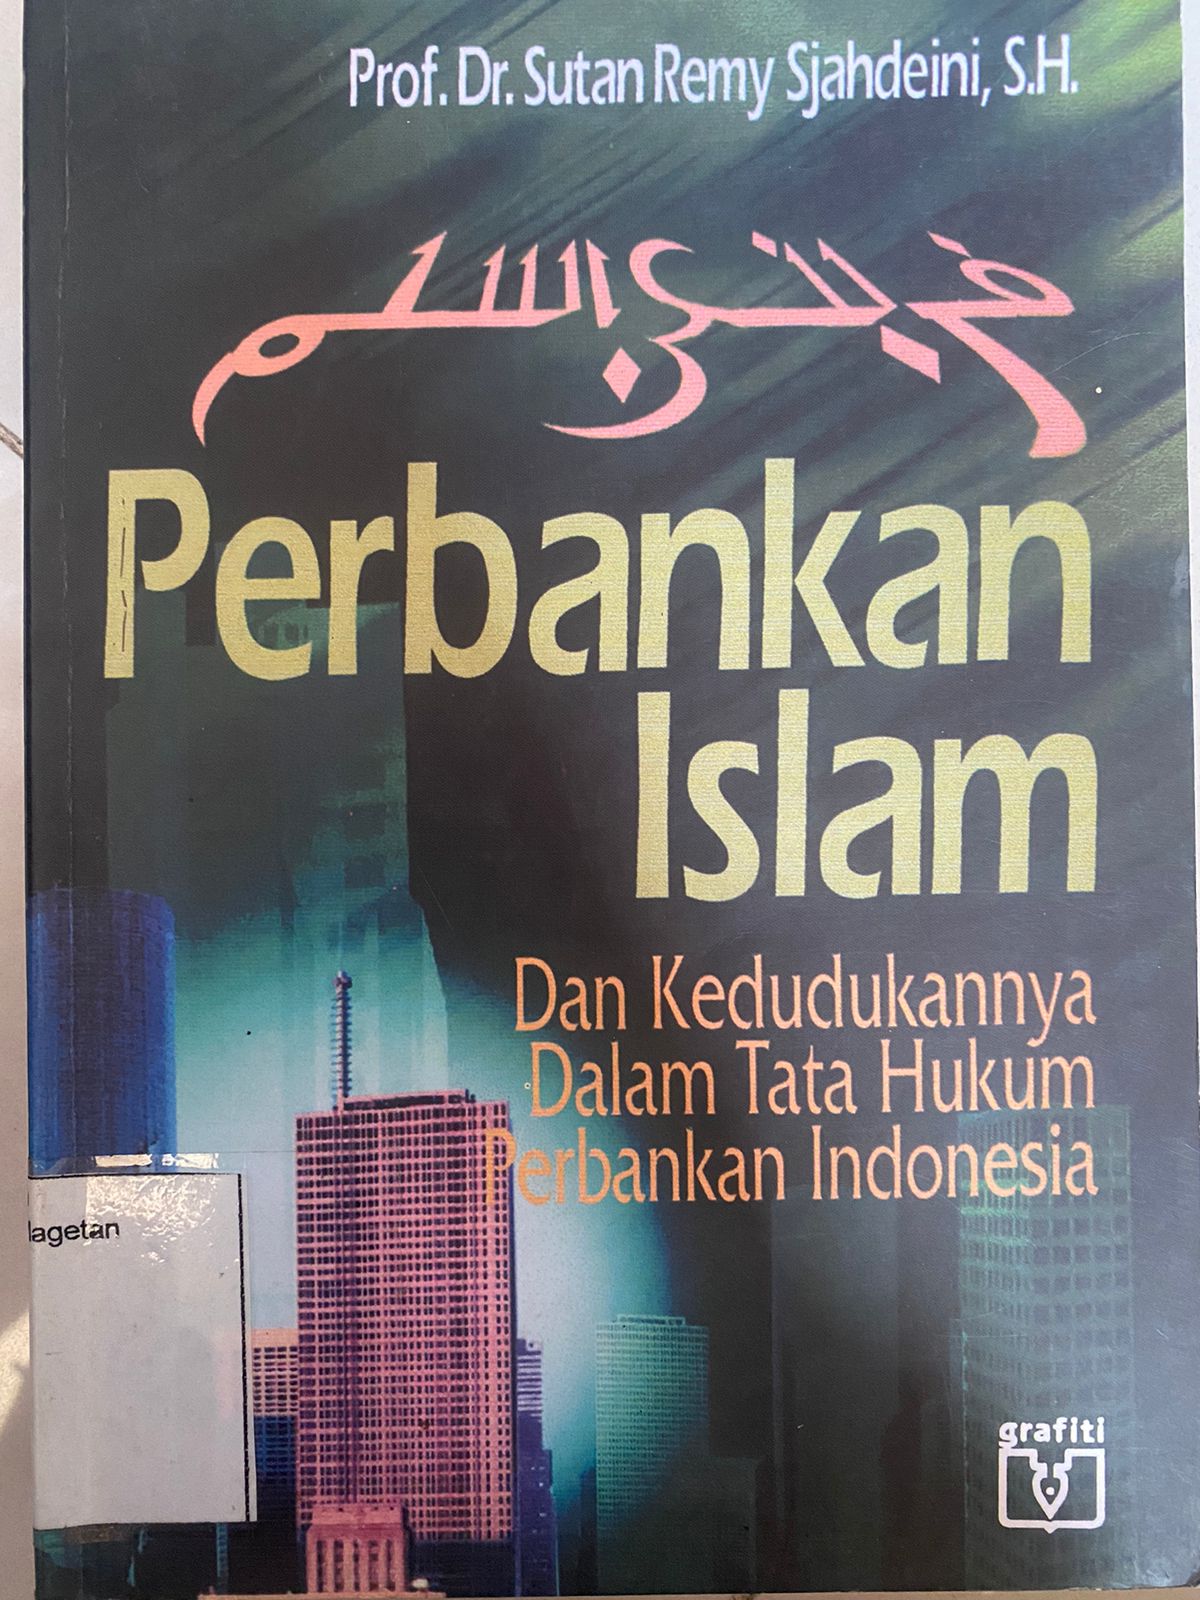 Perbankan islam dan kedudukannya dalam tata hukum perbankan indonesia